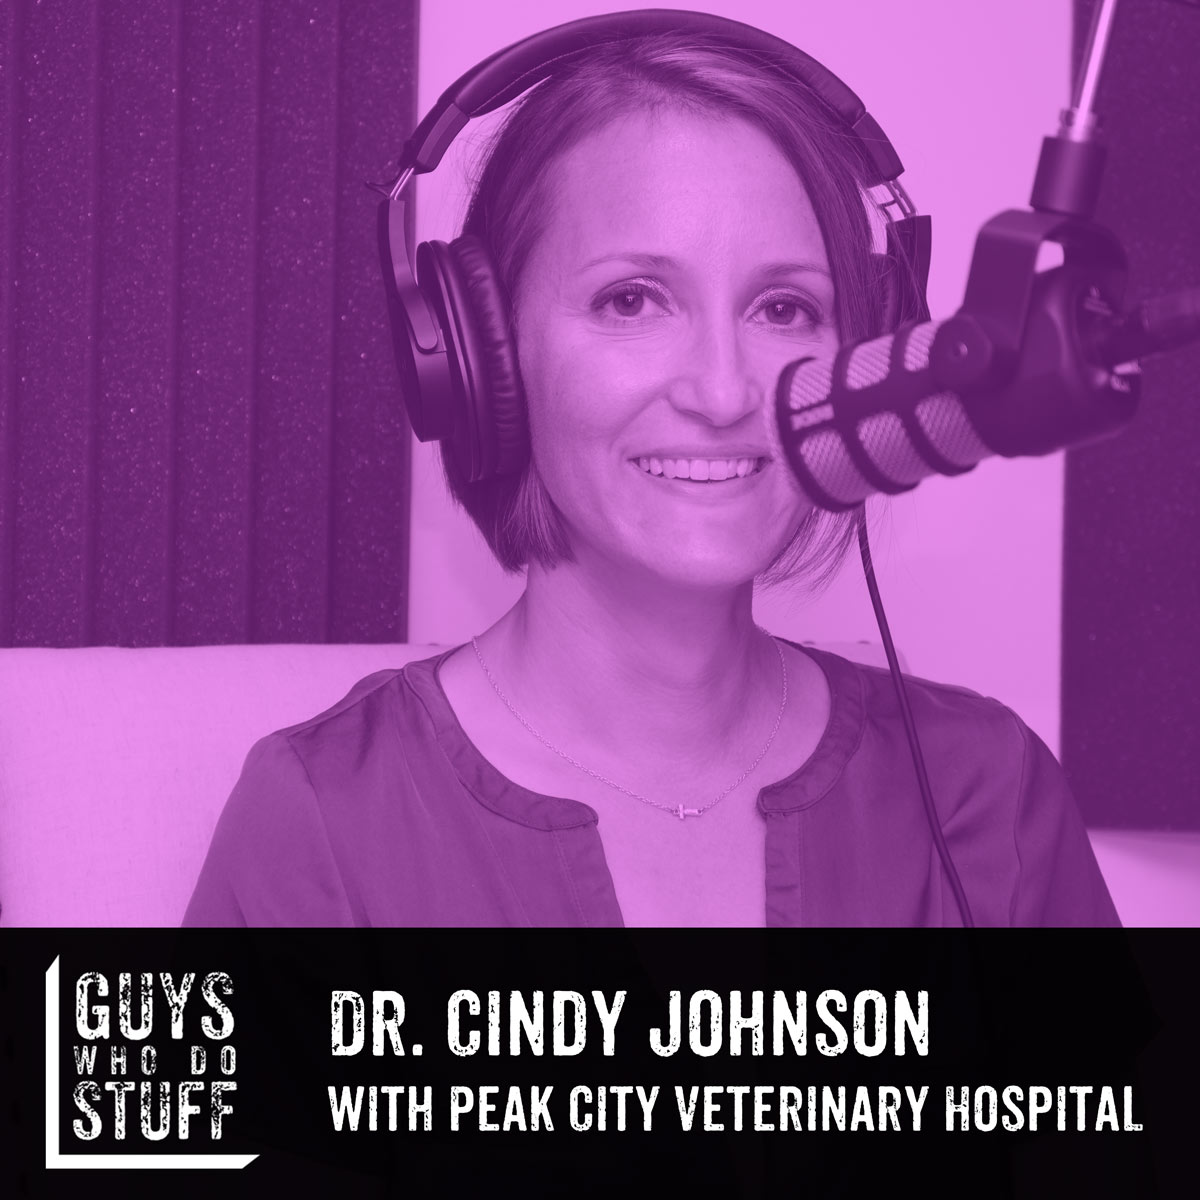 Dr. Cindy Johnson with Peak City Veterinary Hospital